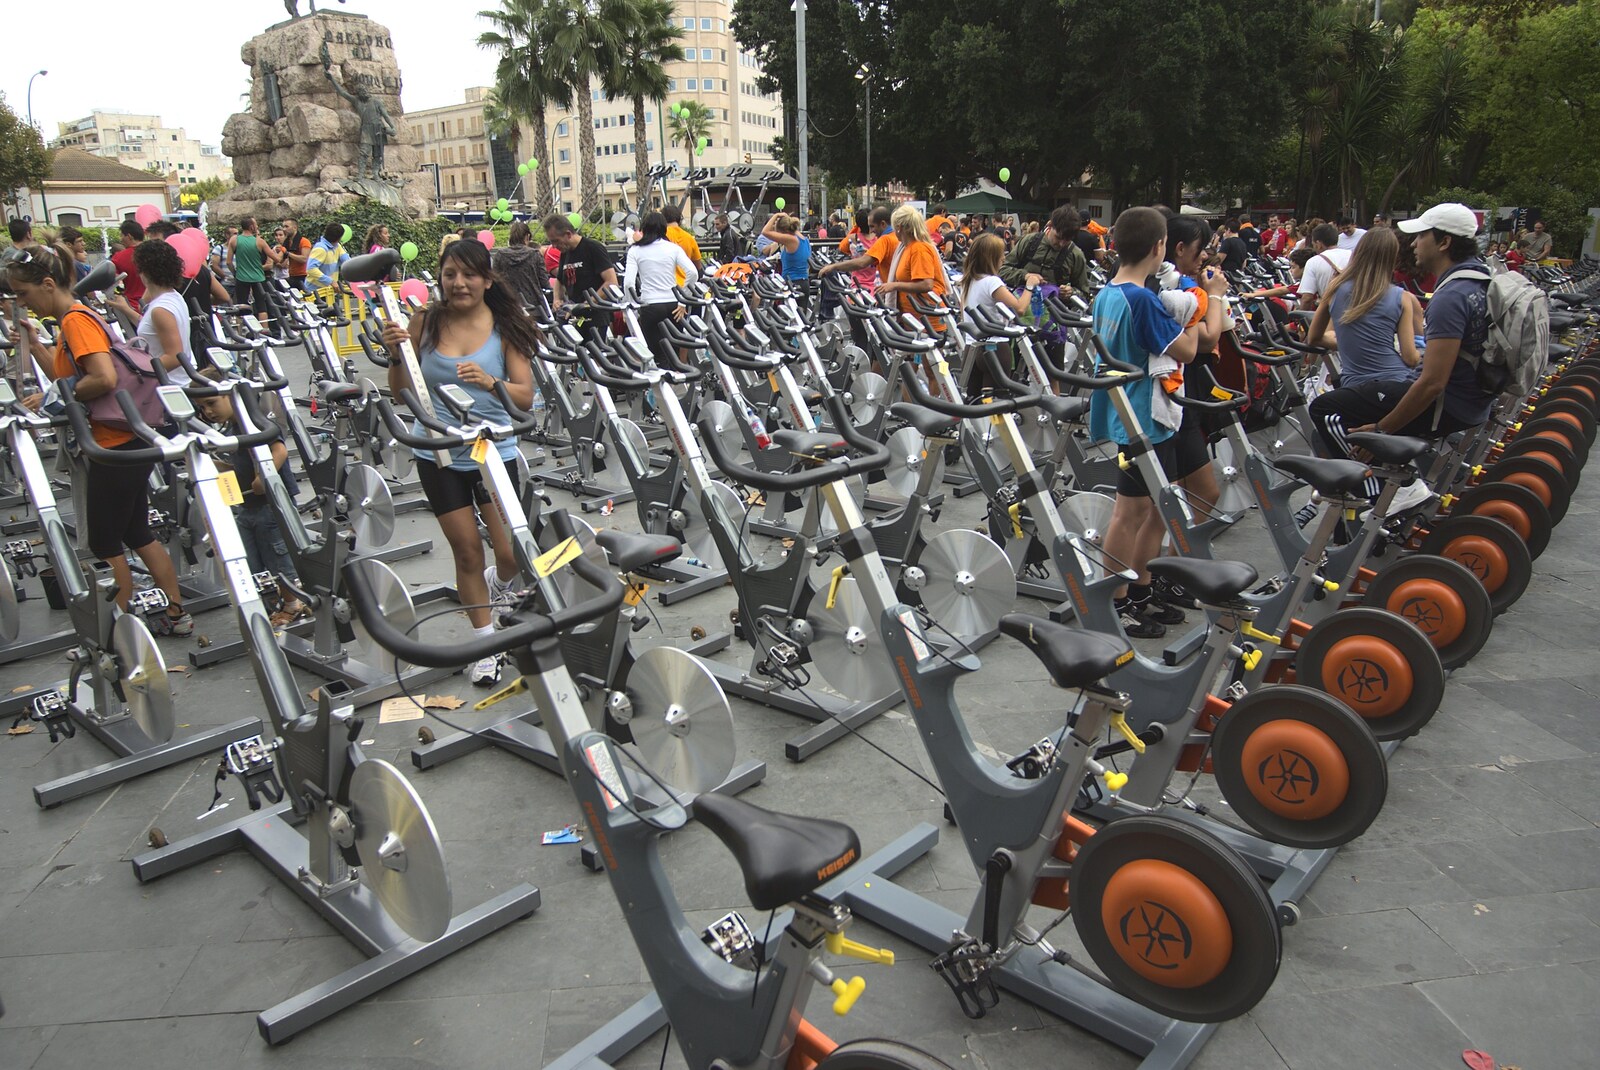 Massed exercise bikes from A Postcard From Palmanova, Mallorca, Spain - 21st September 2009